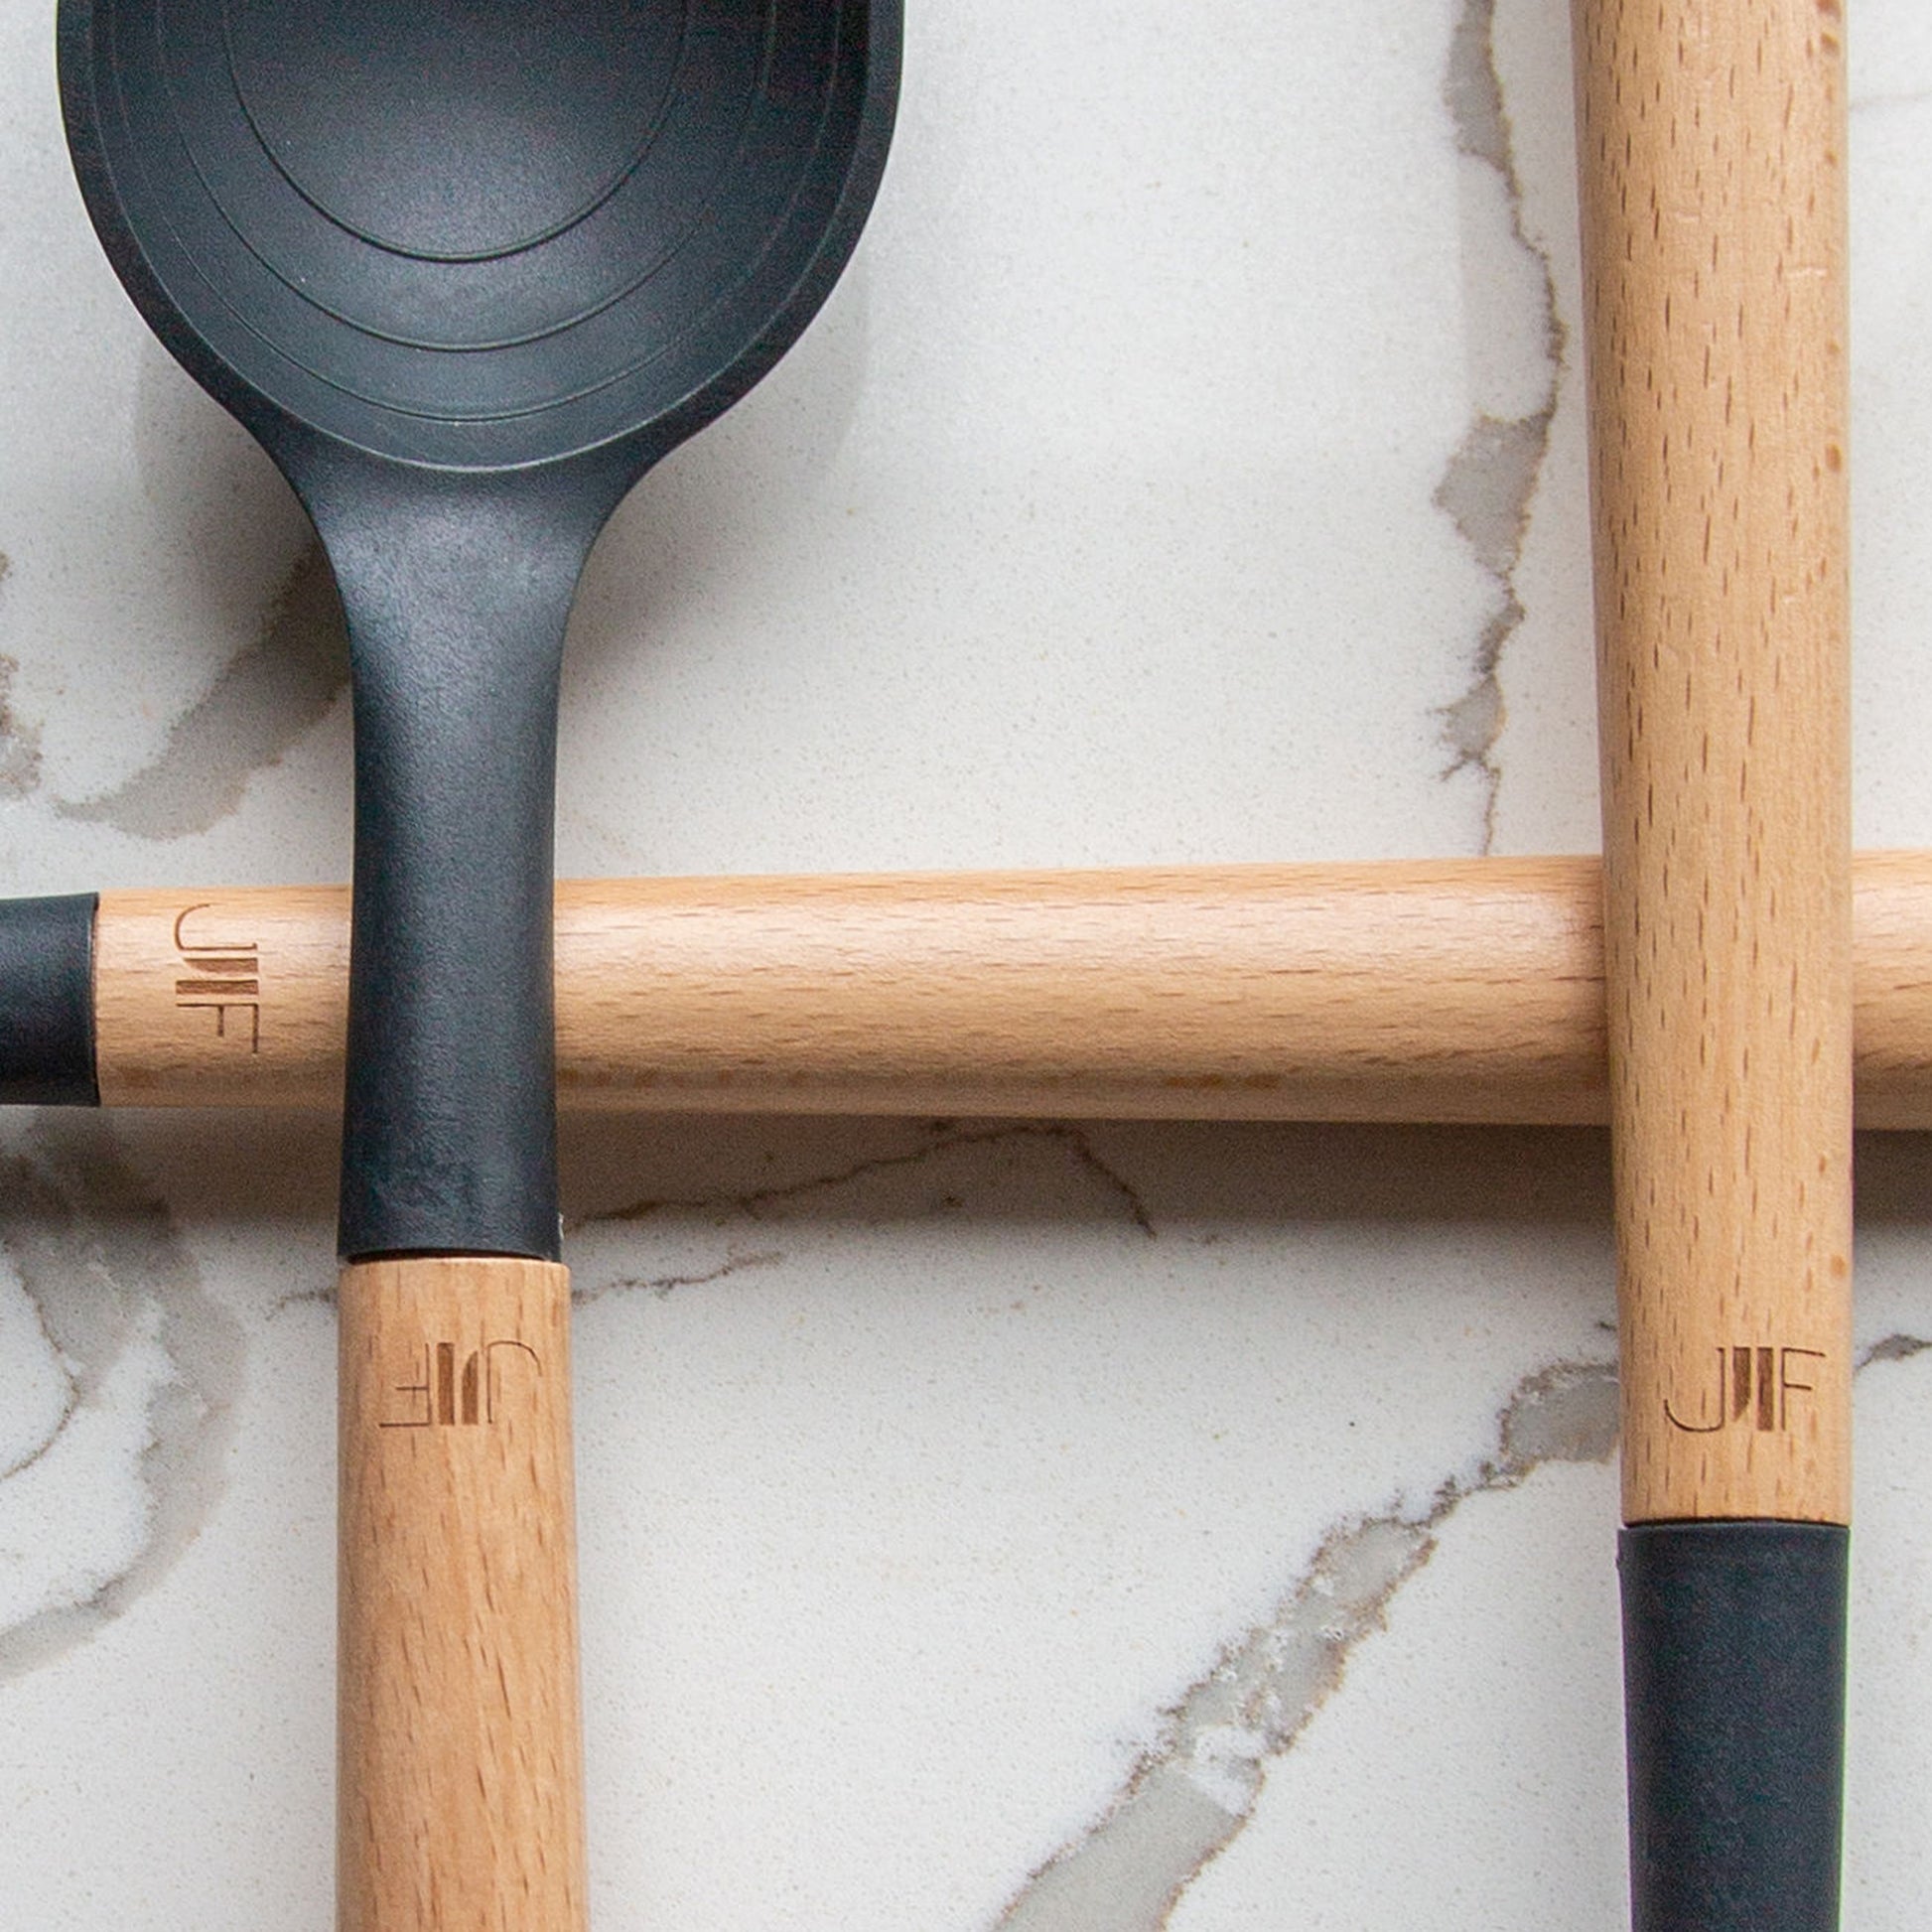 Tools & Gadgets Wooden Kitchen Utensil Set (3-Piece)